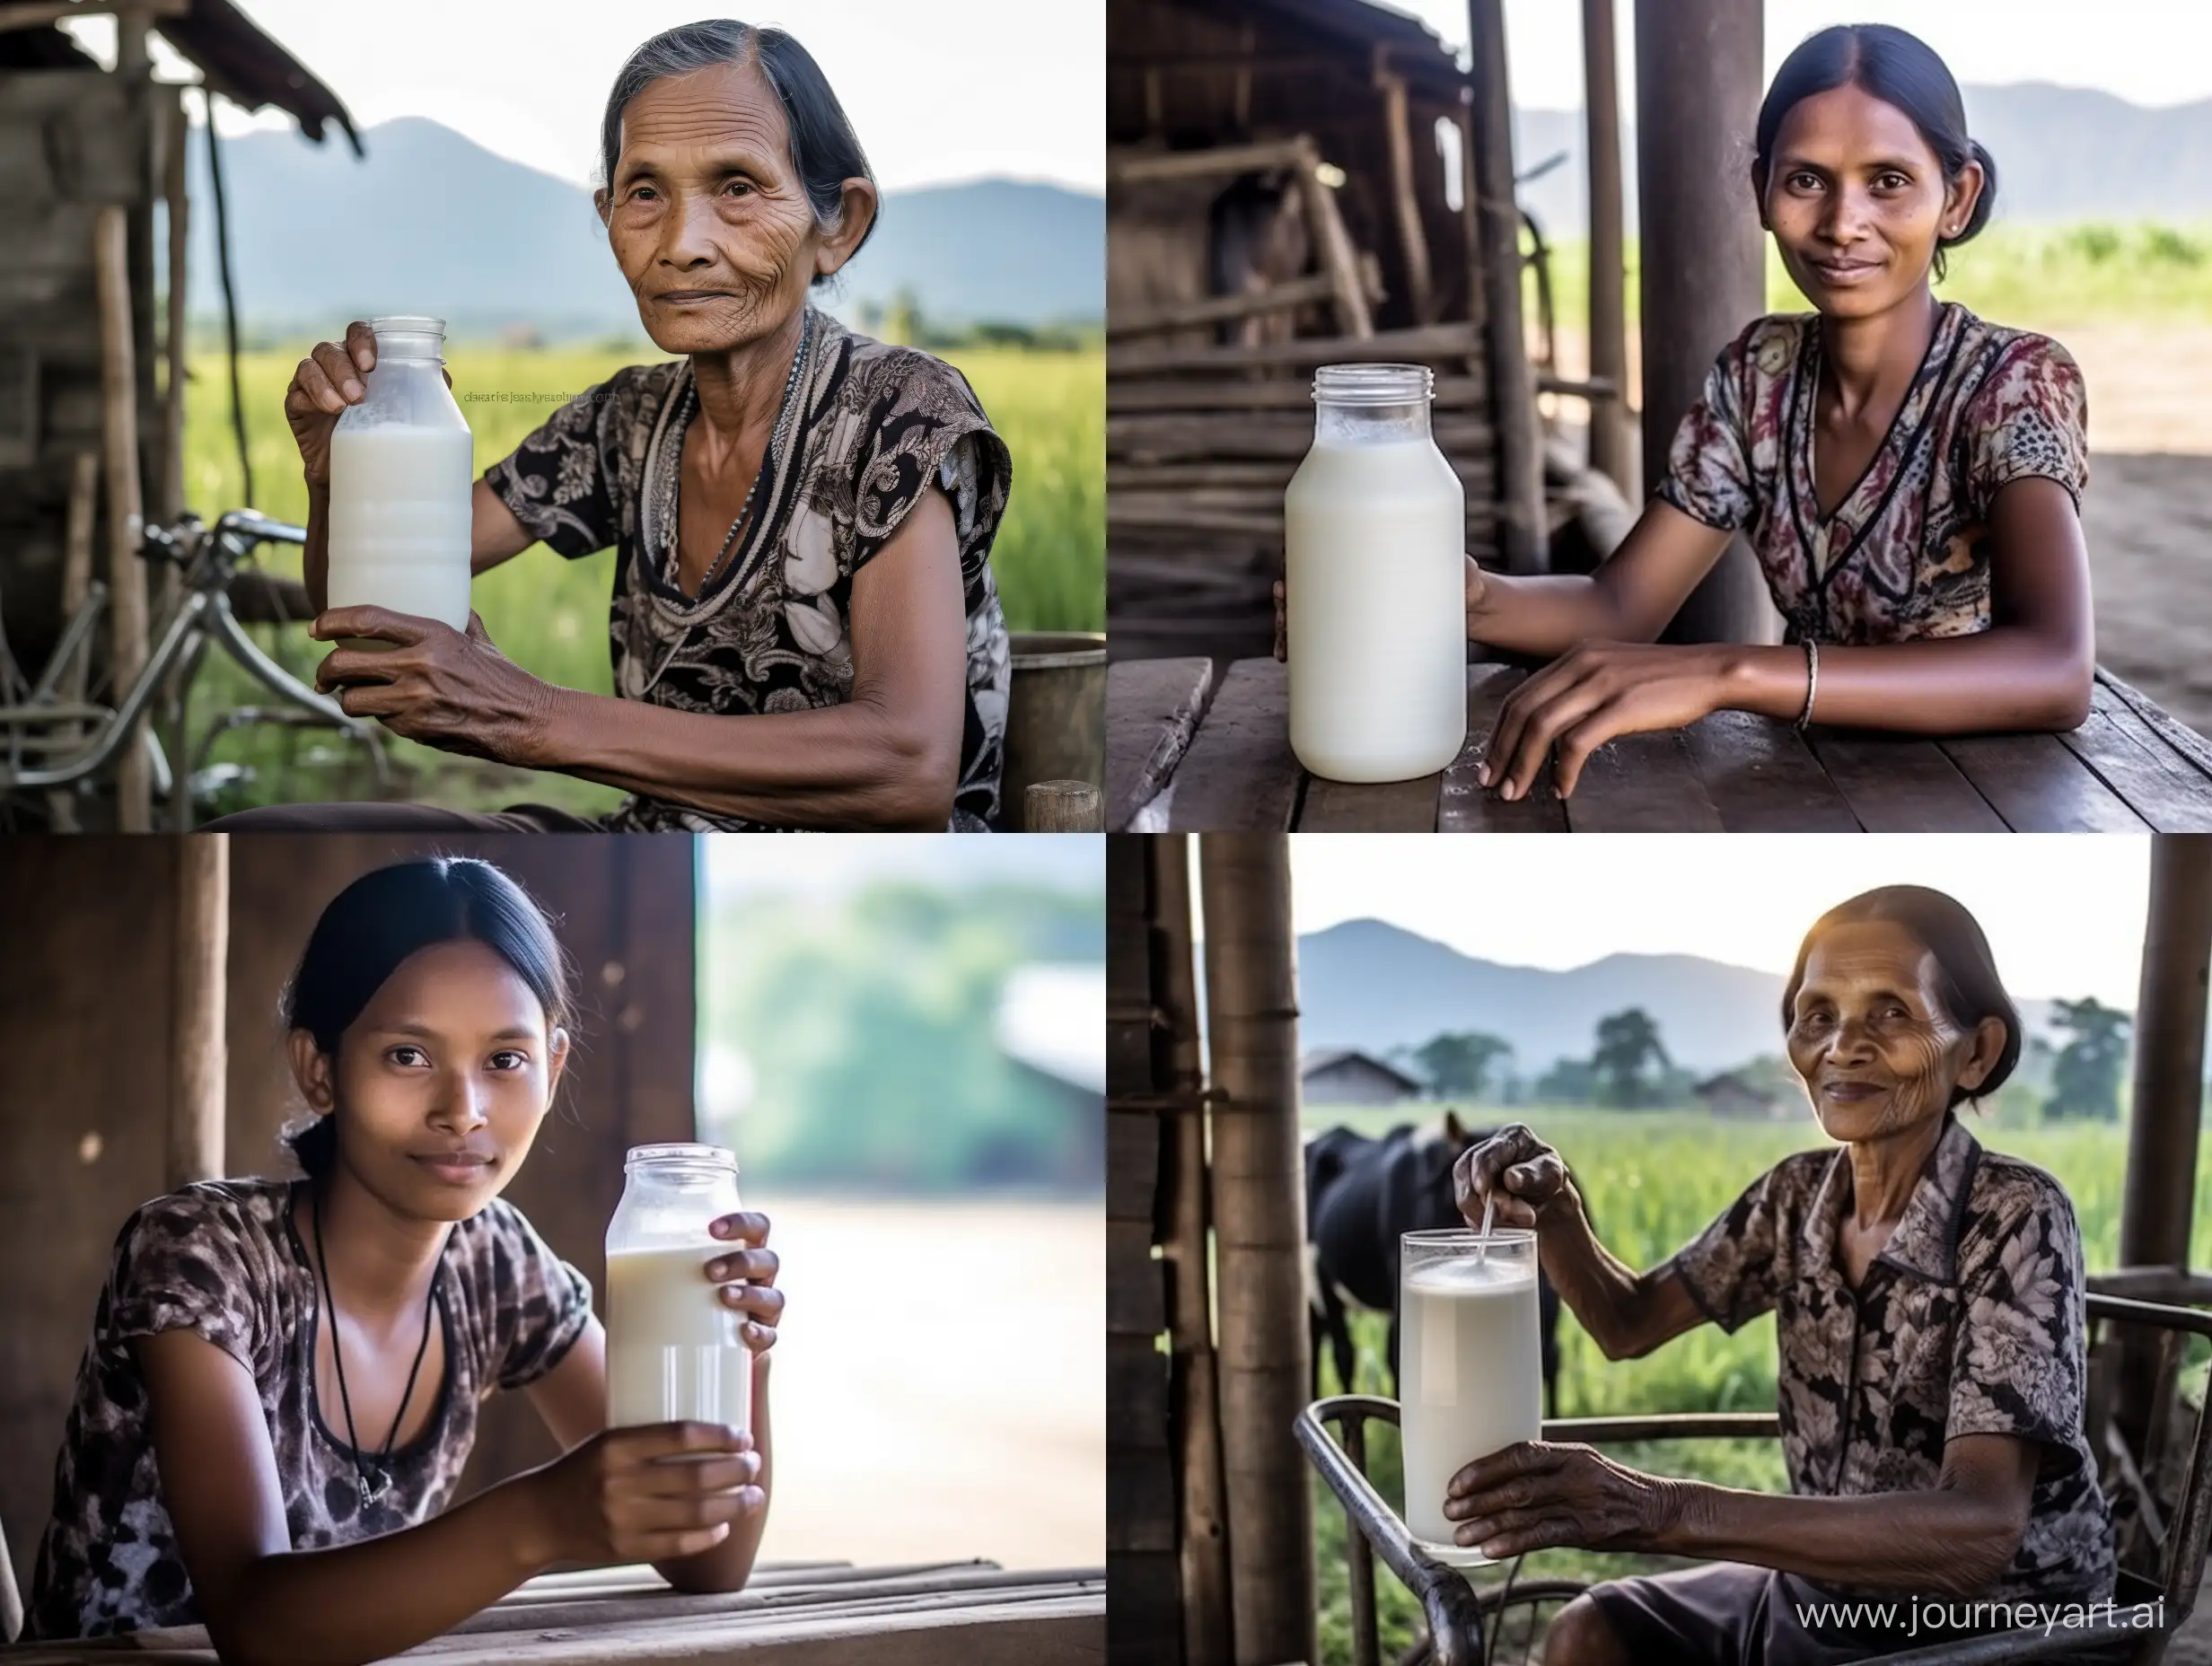 Radiant-Indonesian-Woman-Savoring-Milk-Under-the-Sunlight